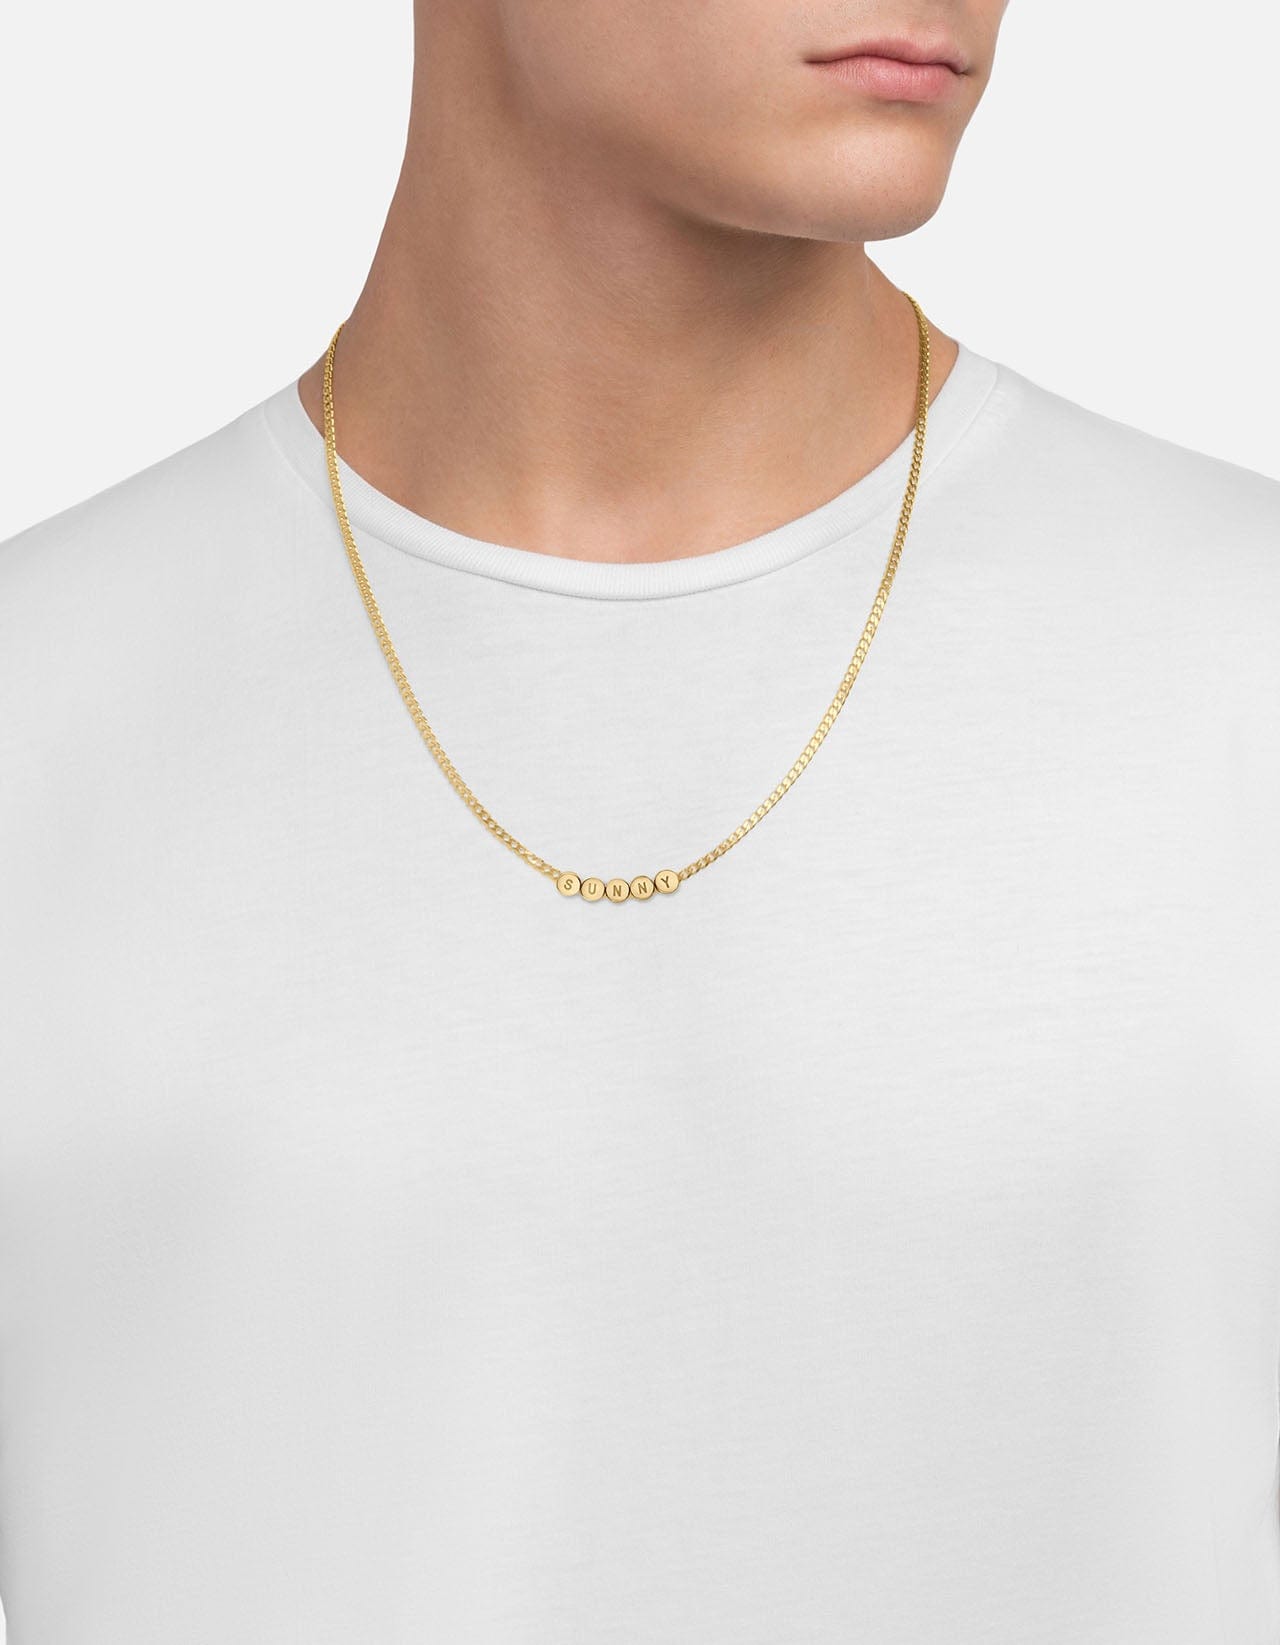 Single Satellite Chain Necklace in 18k Yellow Gold Vermeil | Kendra Scott